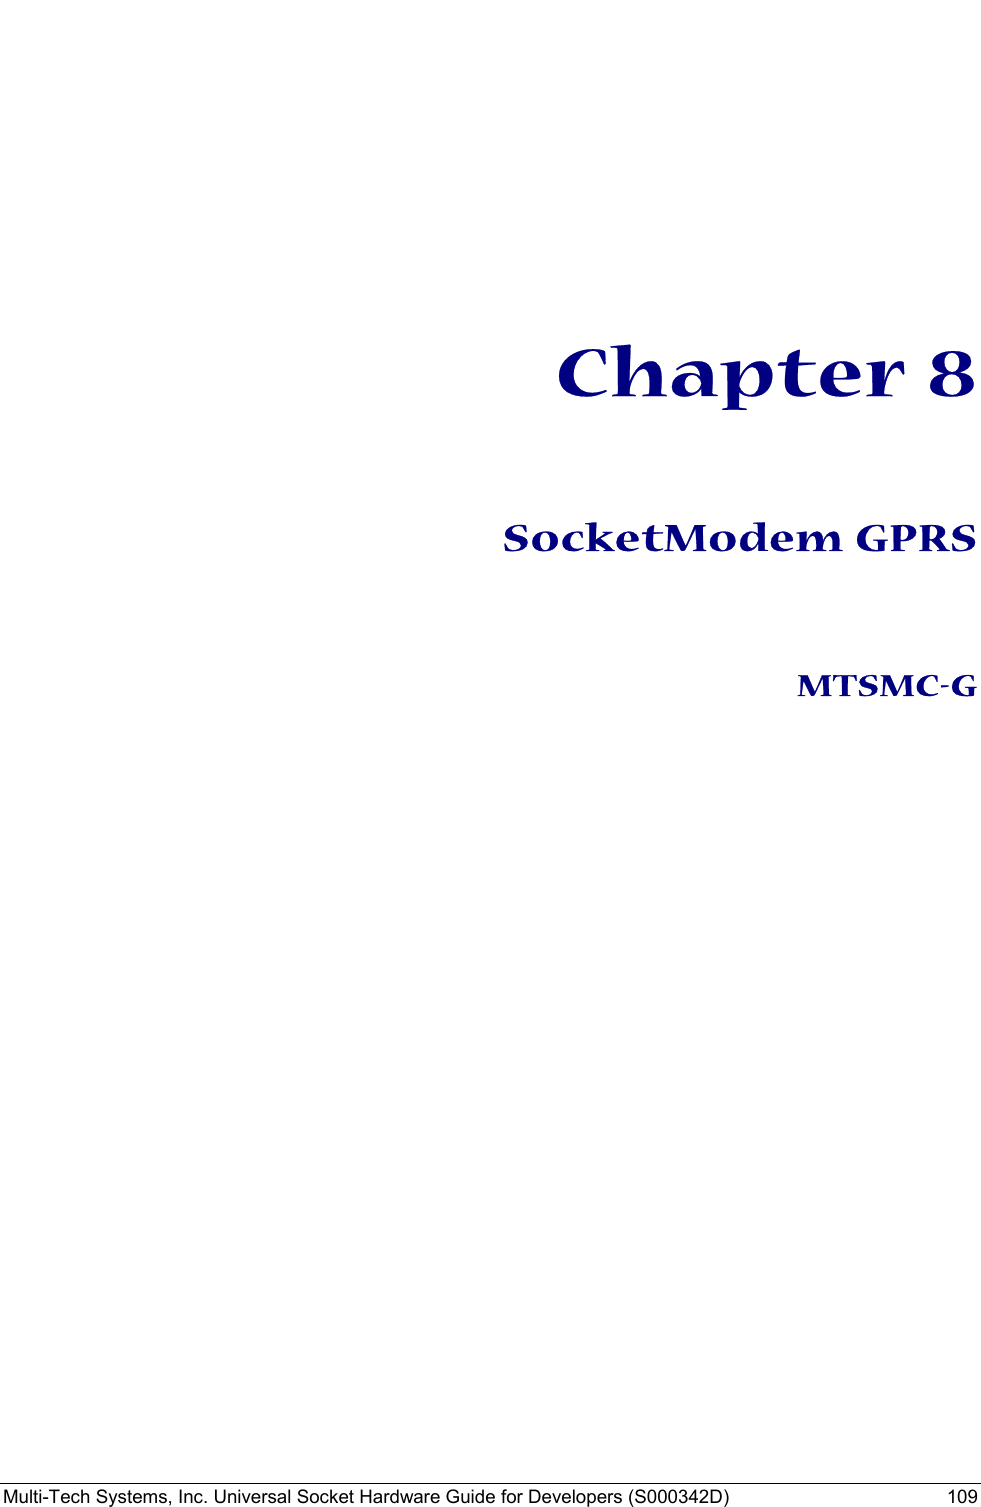  Multi-Tech Systems, Inc. Universal Socket Hardware Guide for Developers (S000342D)  109        Chapter 8   SocketModem GPRS   MTSMC-G   